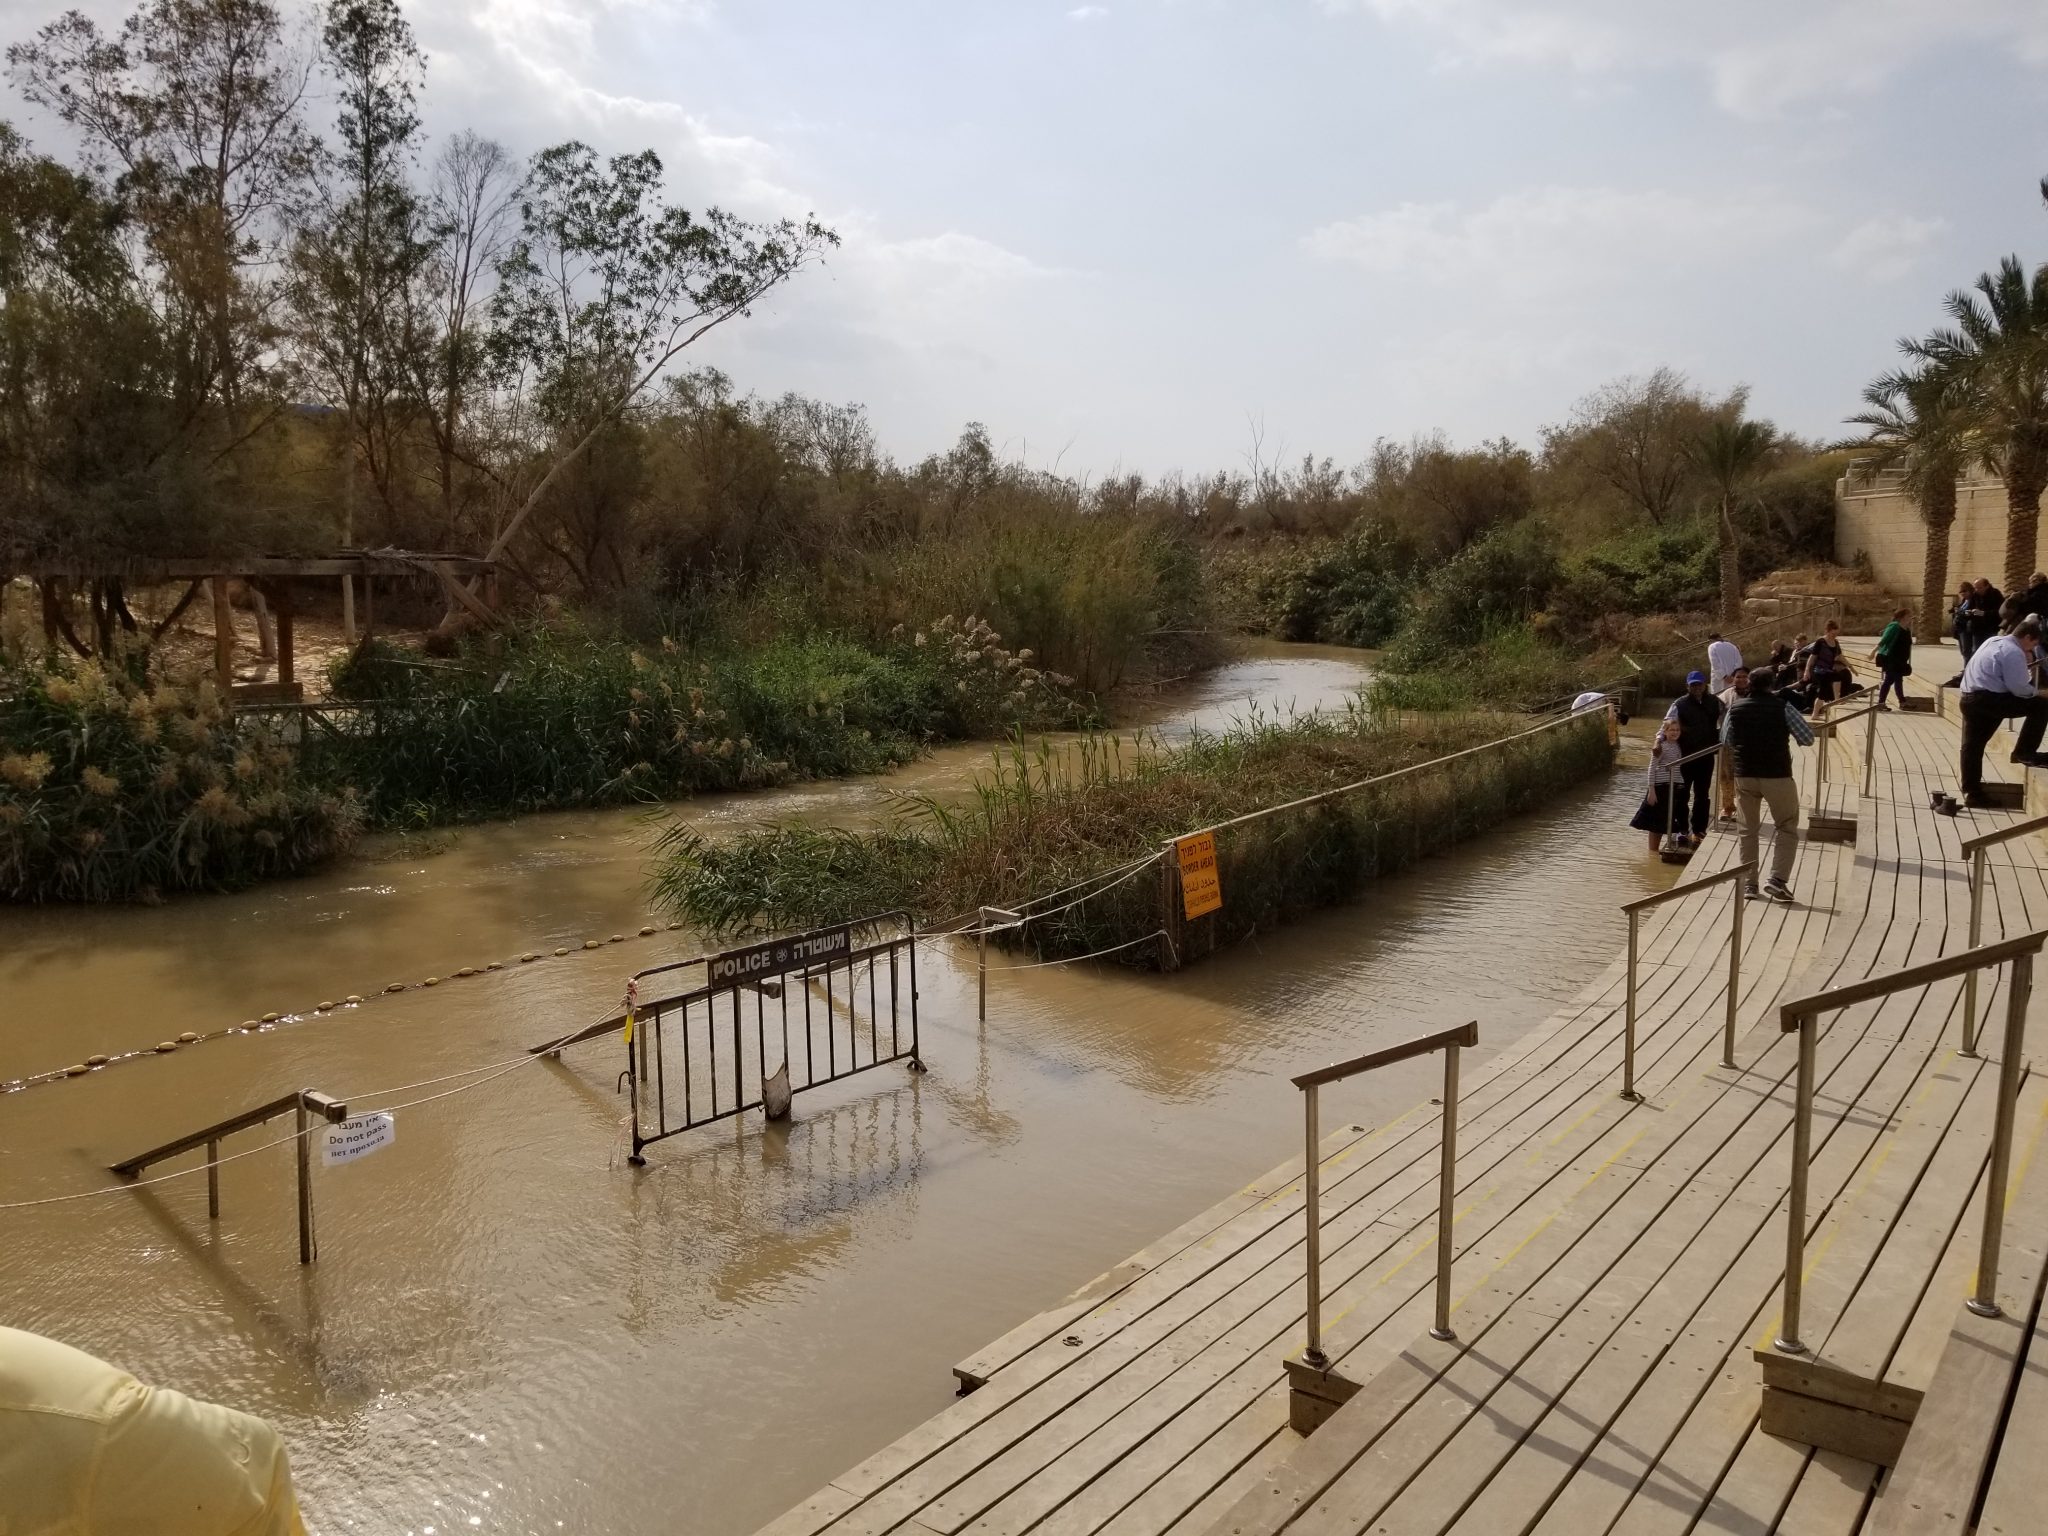 River Jordan (traditional site of Christ's baptism)